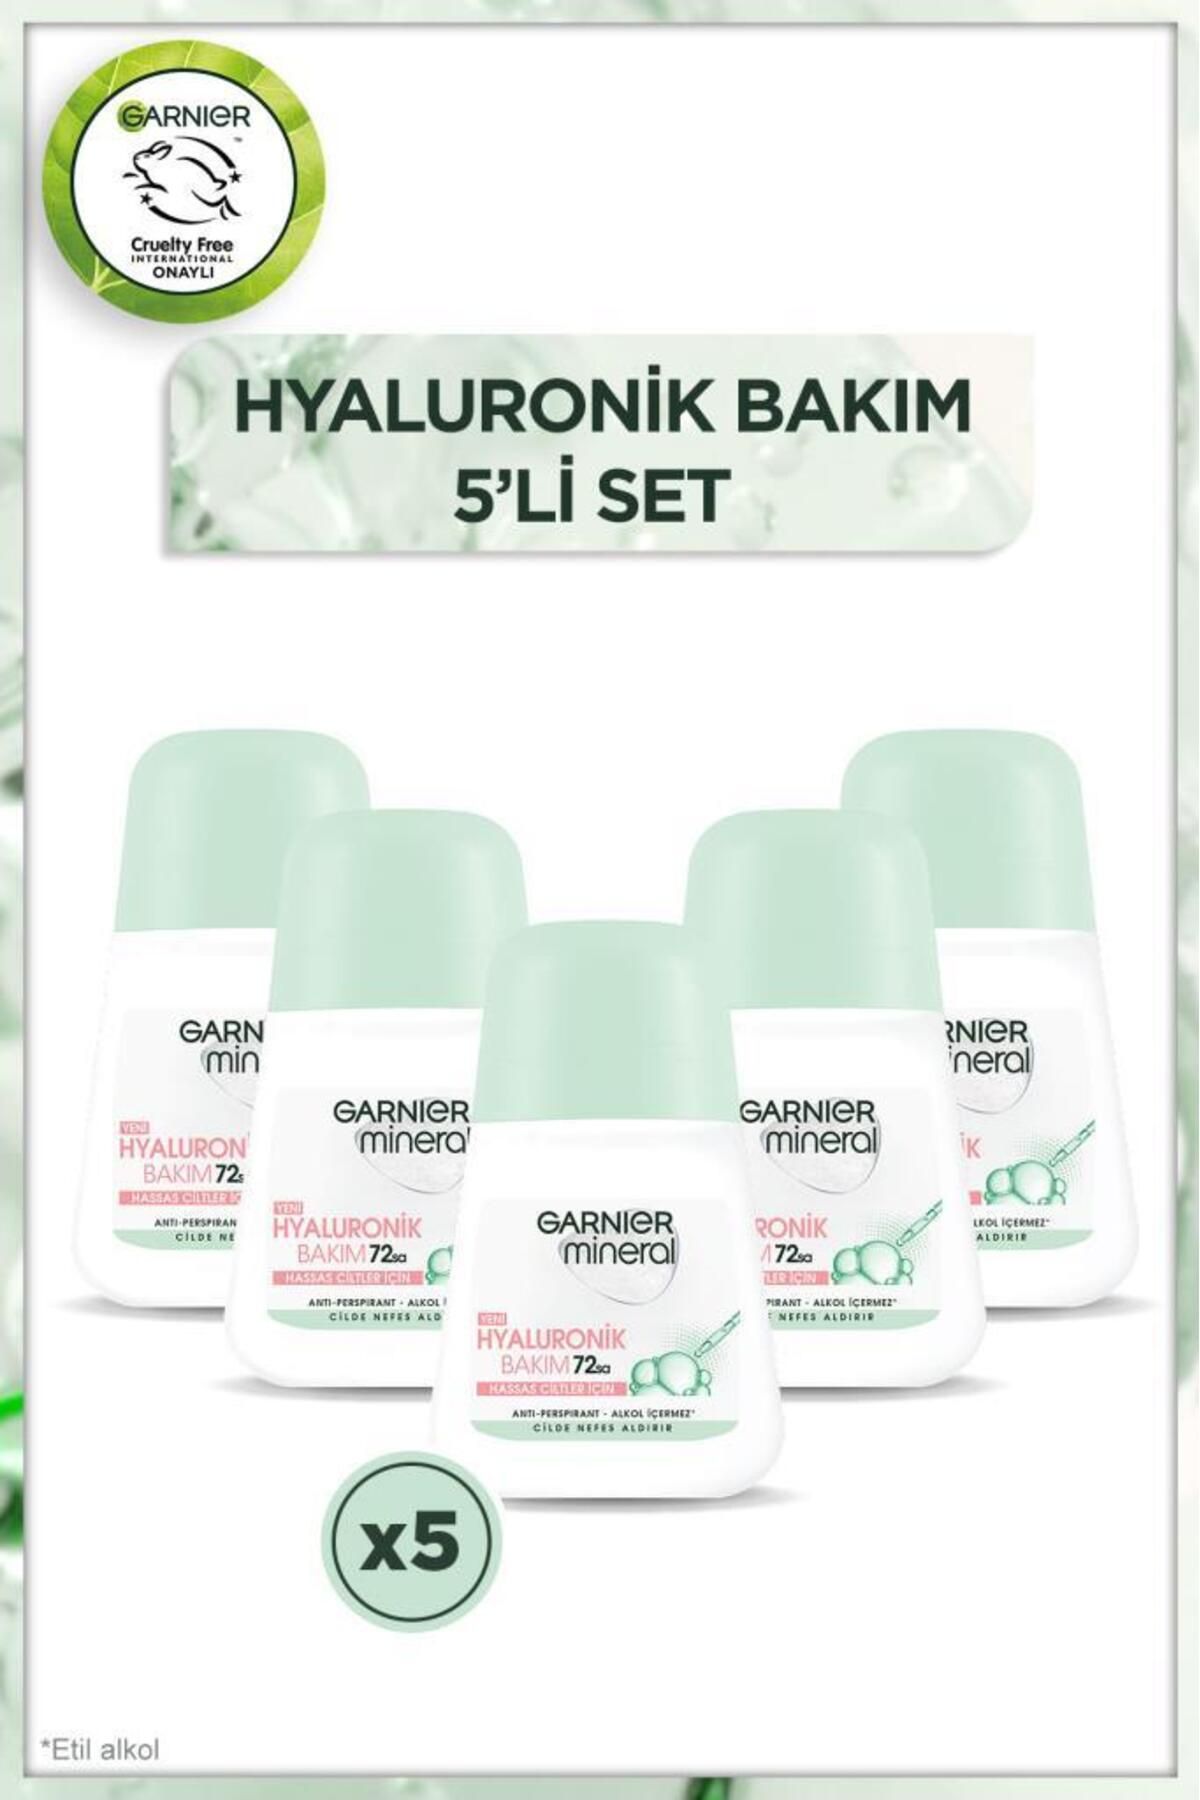 Garnier Mineral Hyaluronik Bakım Roll-on Deodorant 5'li Set